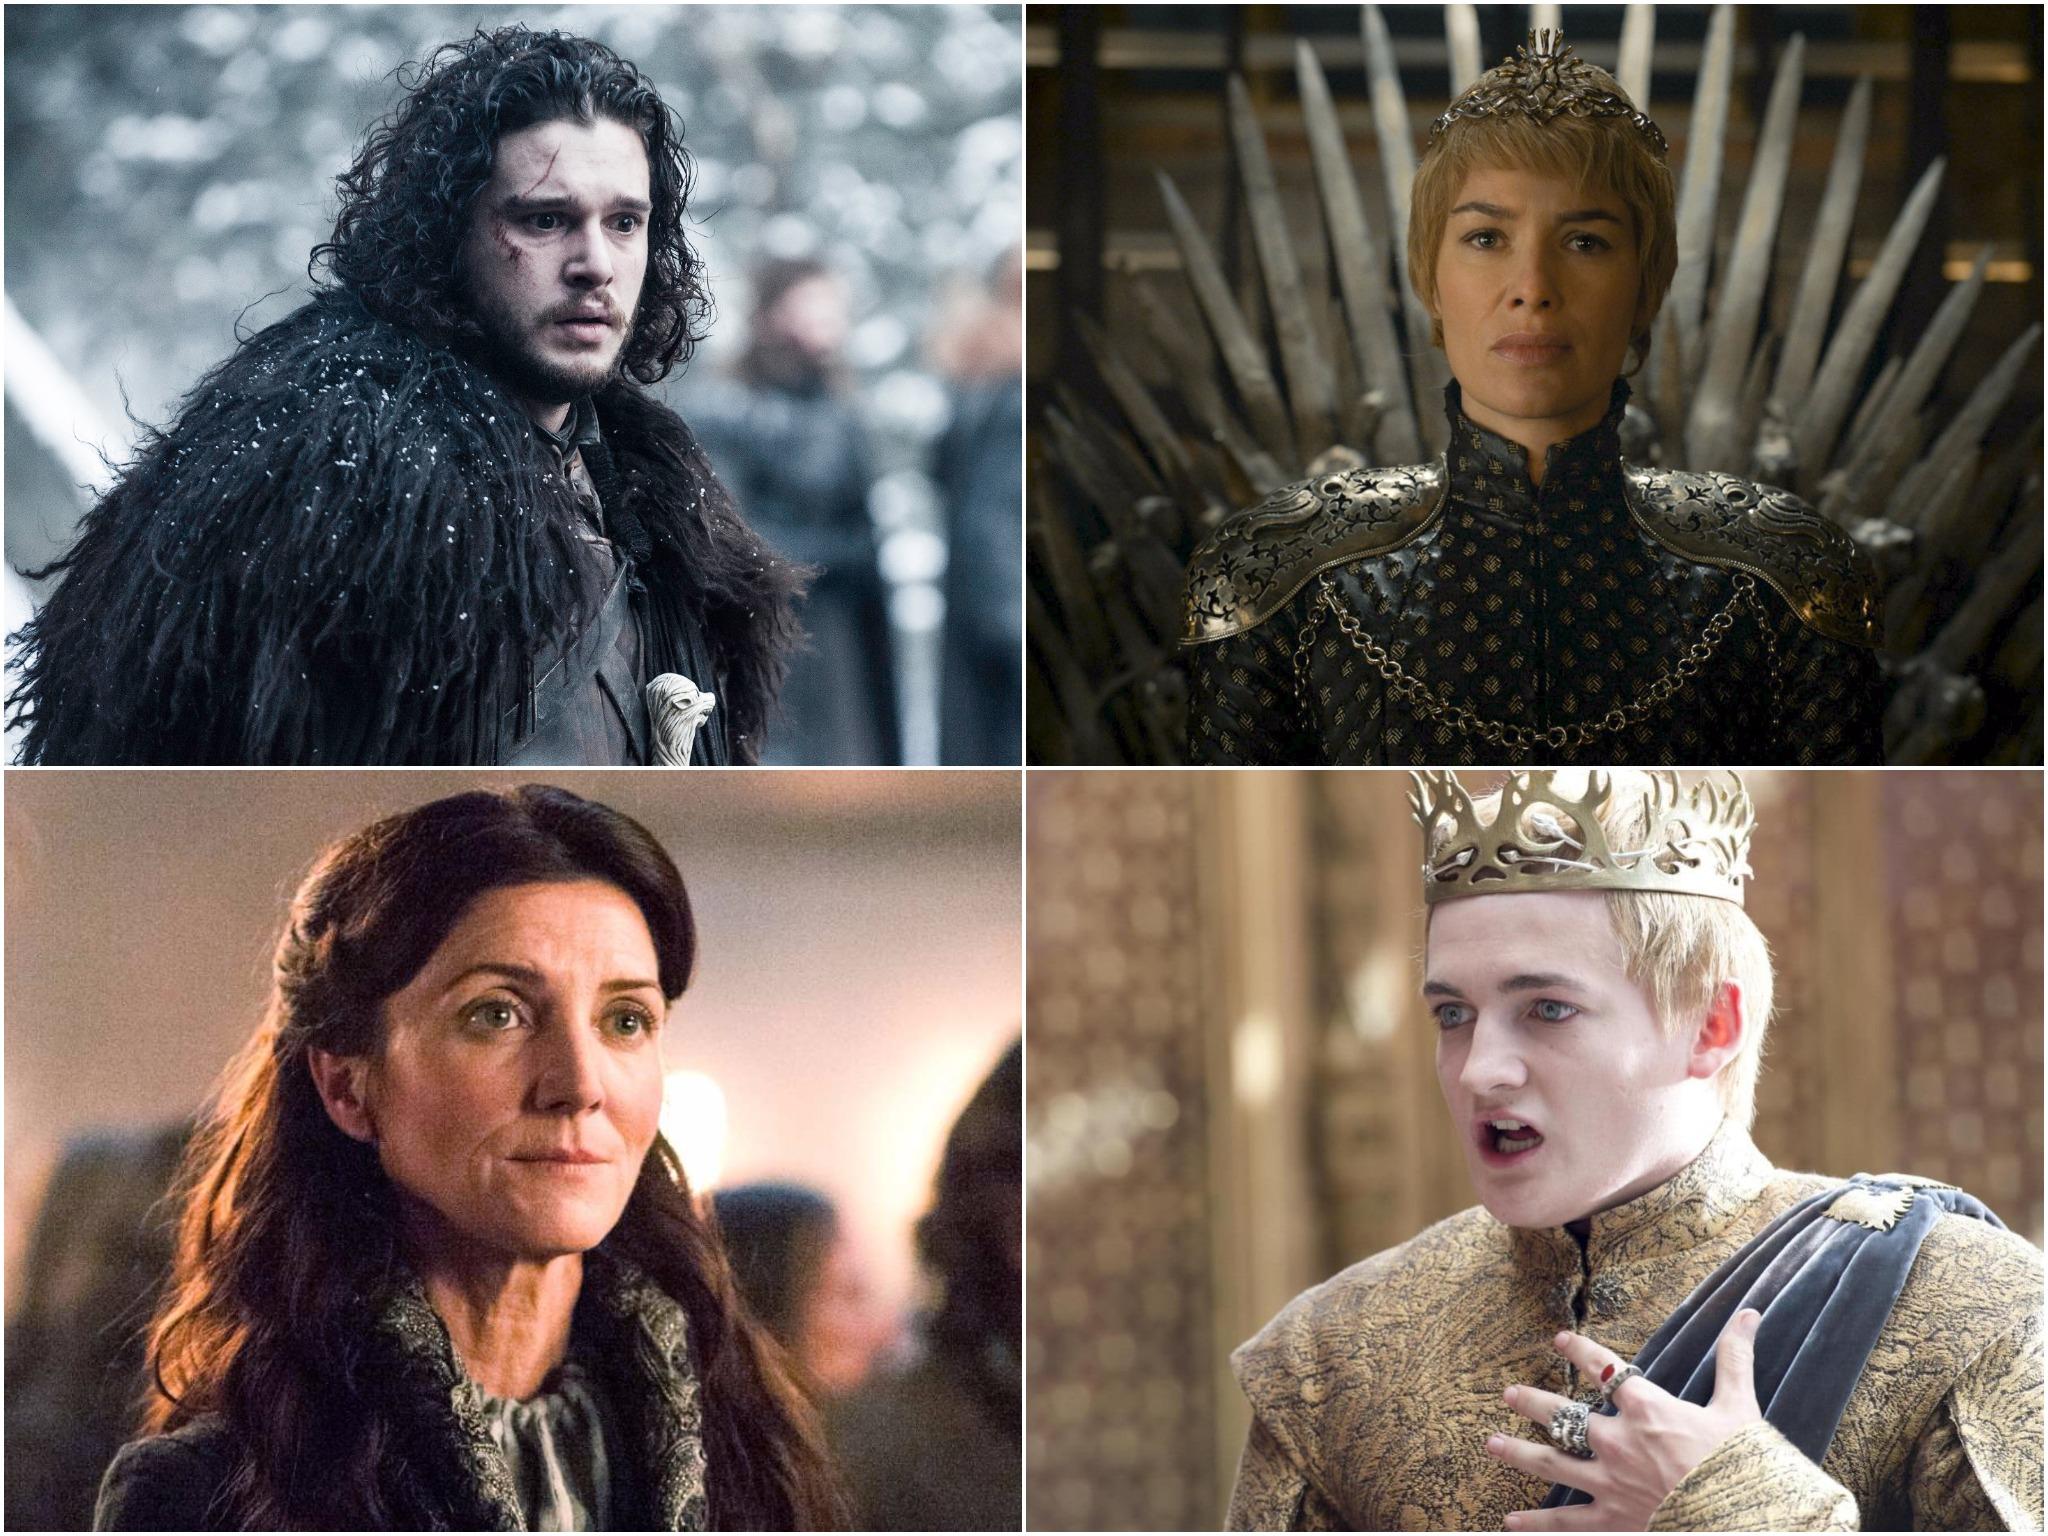 Thrones